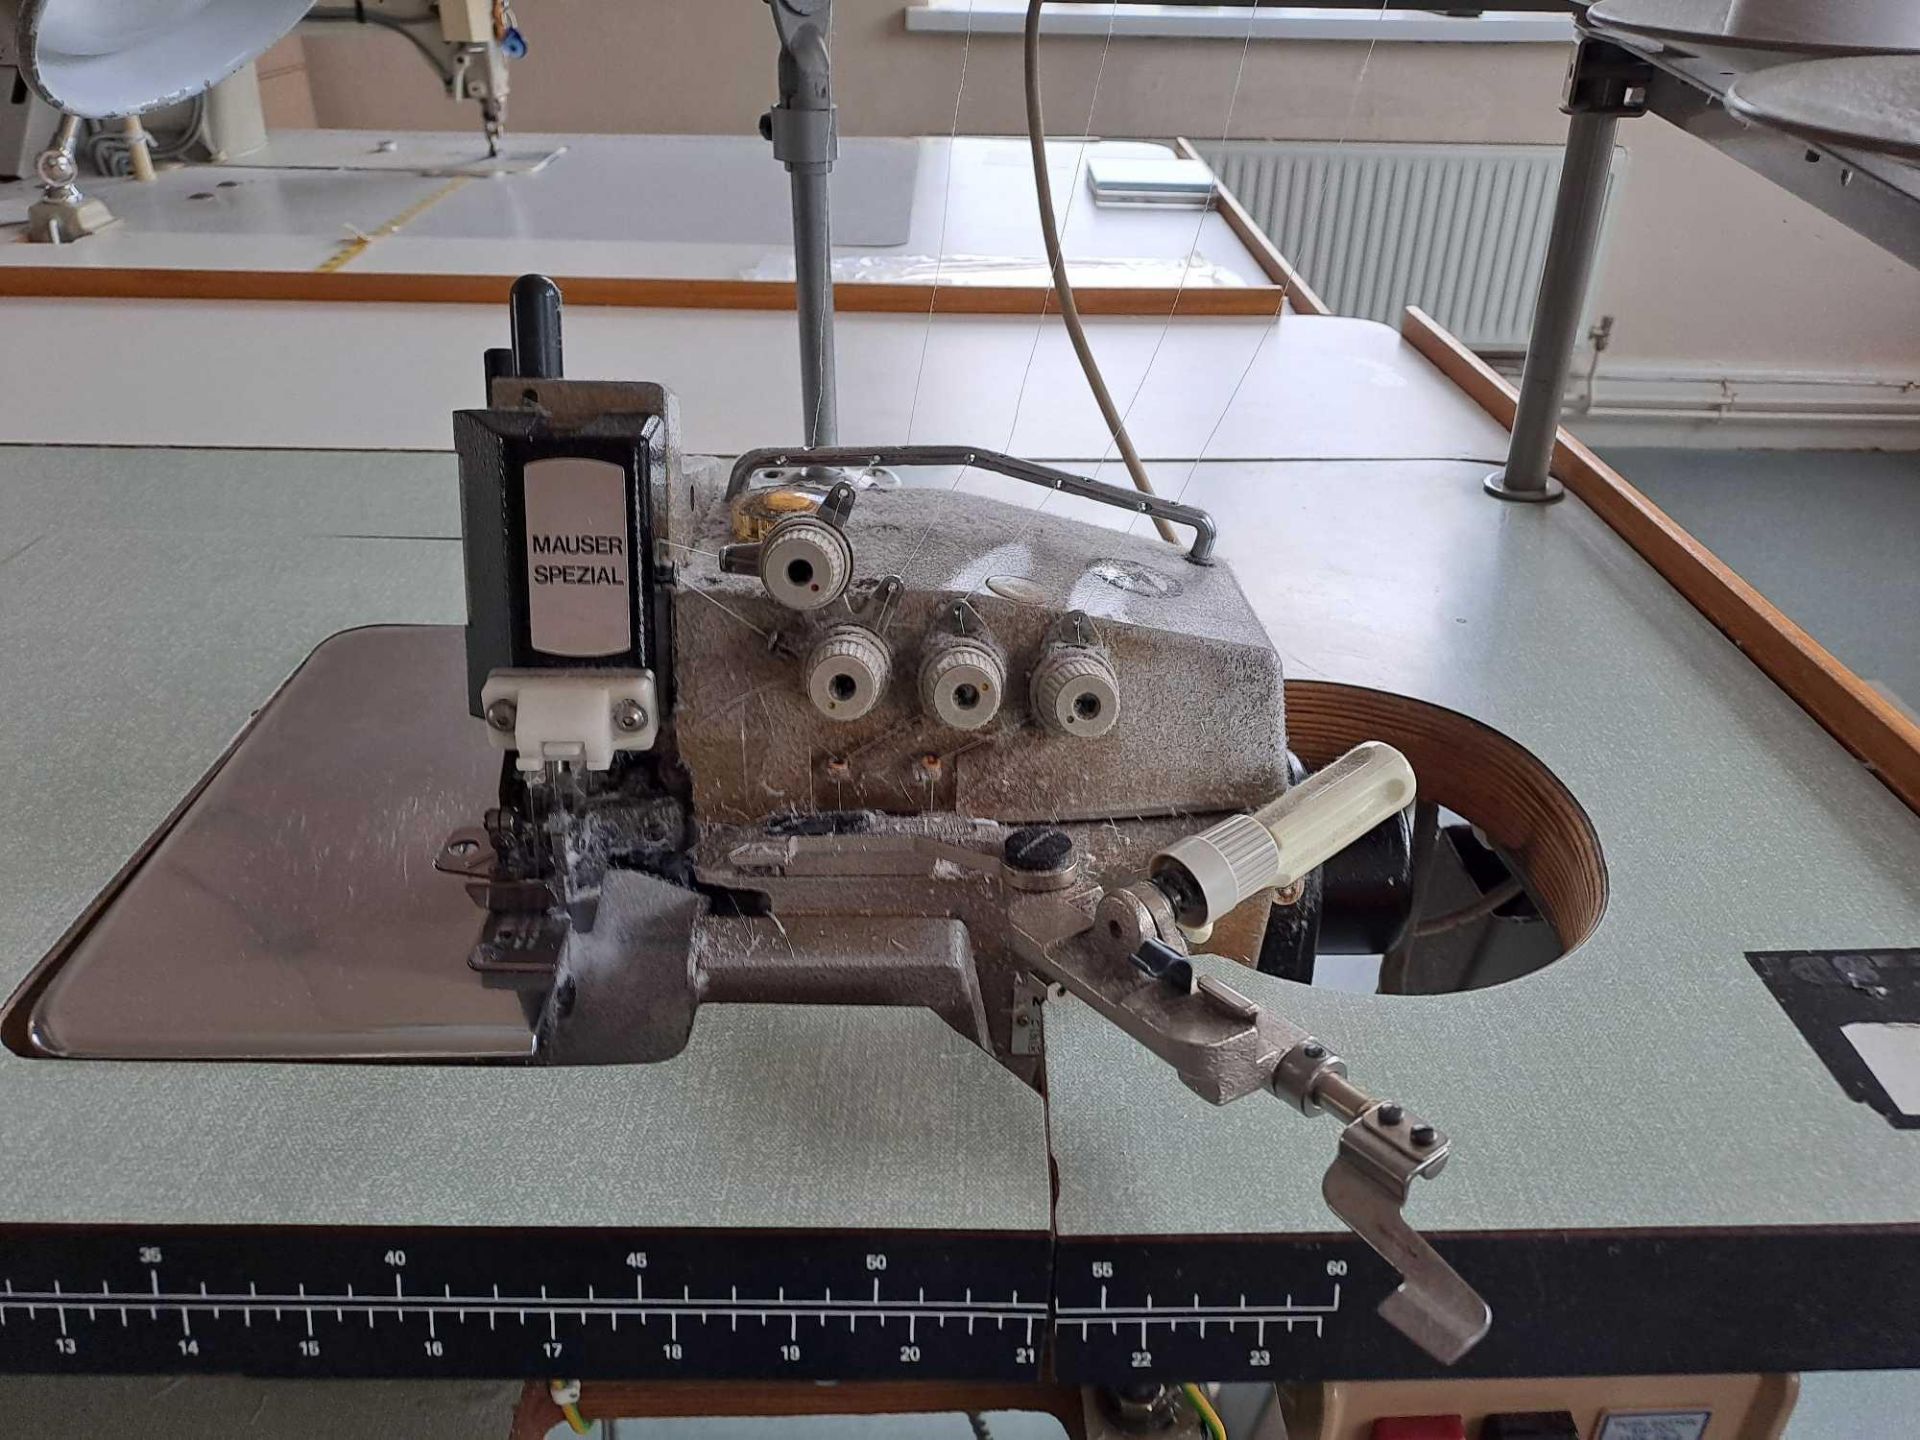 Mauser Spezial Overlocker Sewing Machine - Image 2 of 5